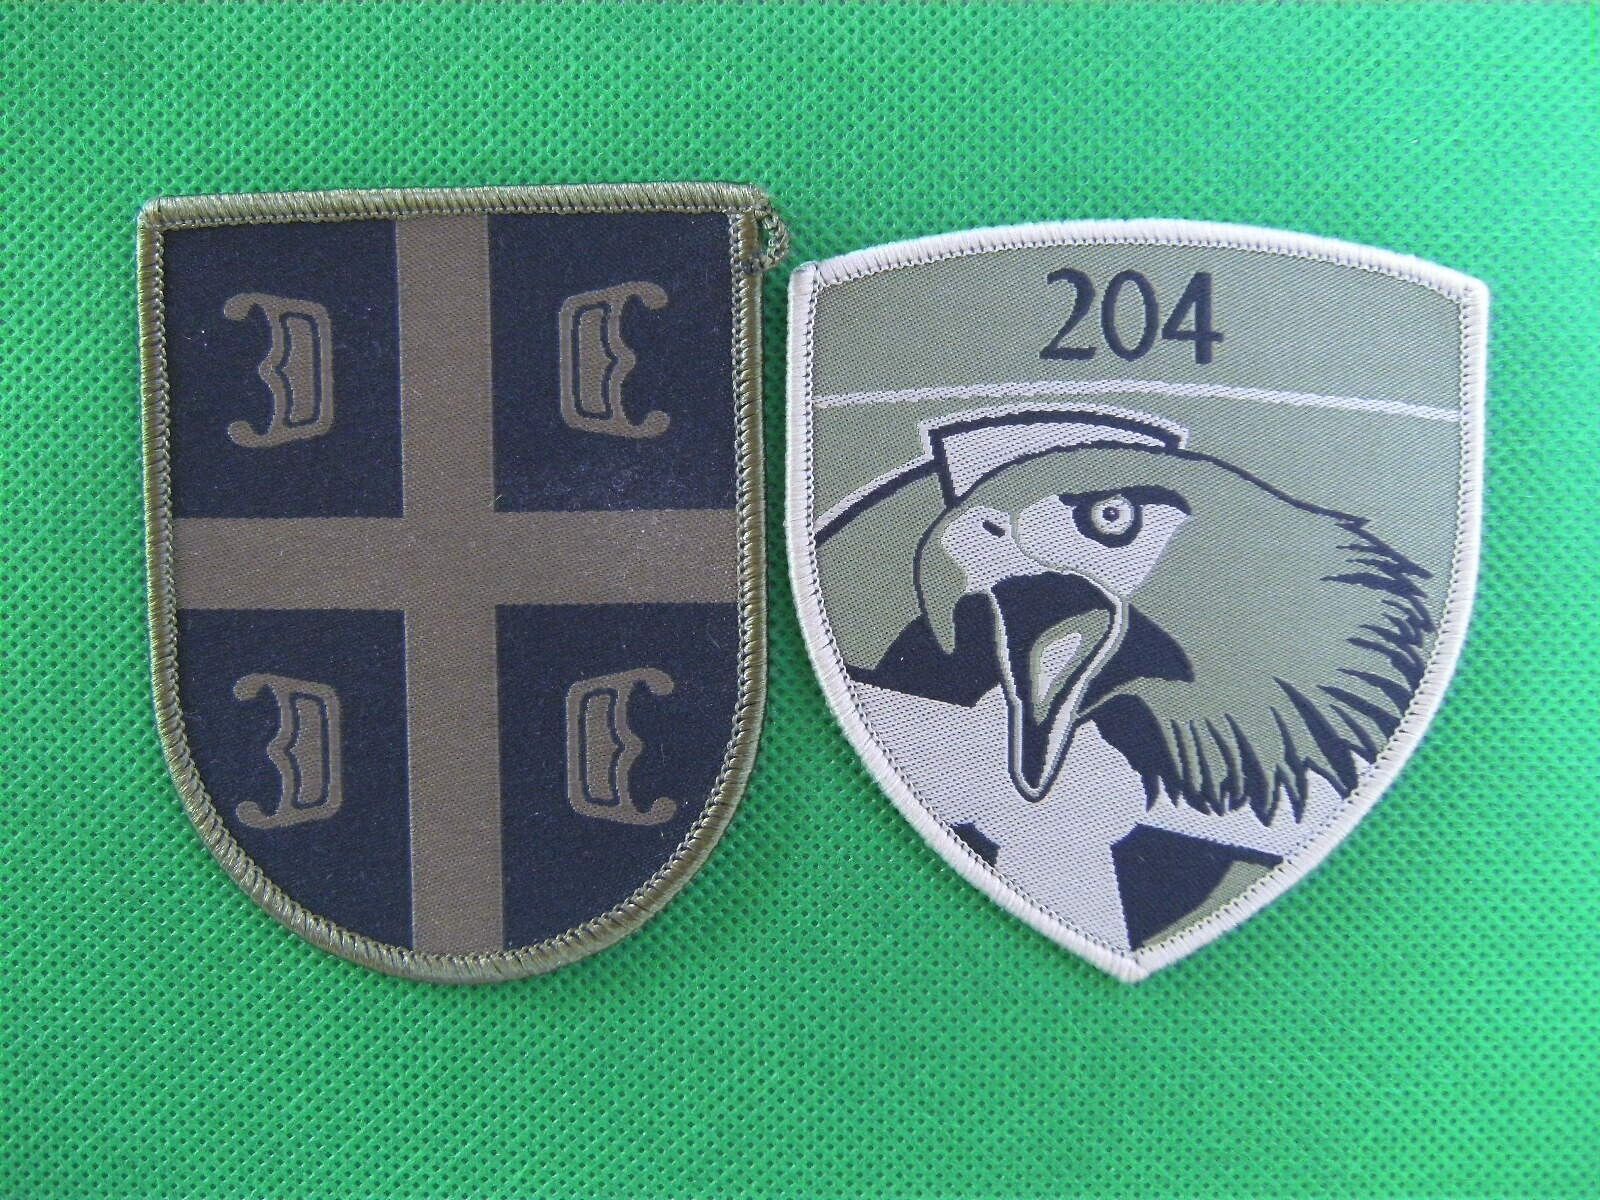 Serbian Army 204 th Air base & Serbian Army insignia-Lot of 2 sleeve patch